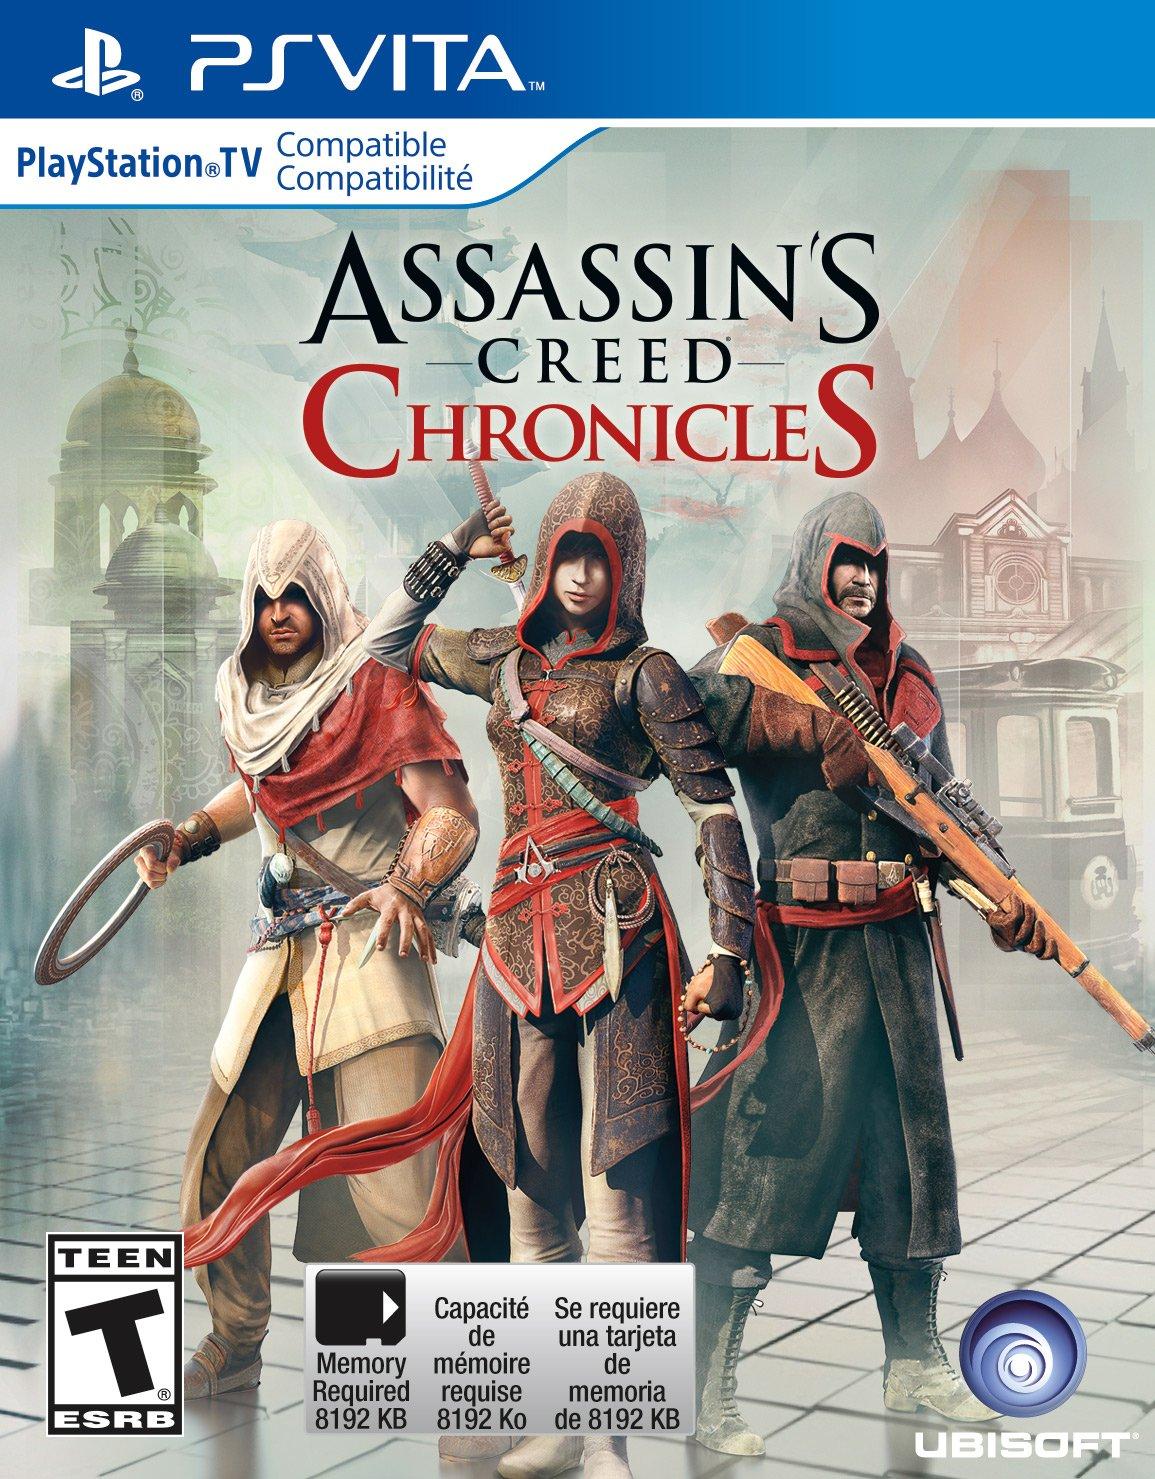 Assassin's Creed PlayStation 4 | PlayStation GameStop